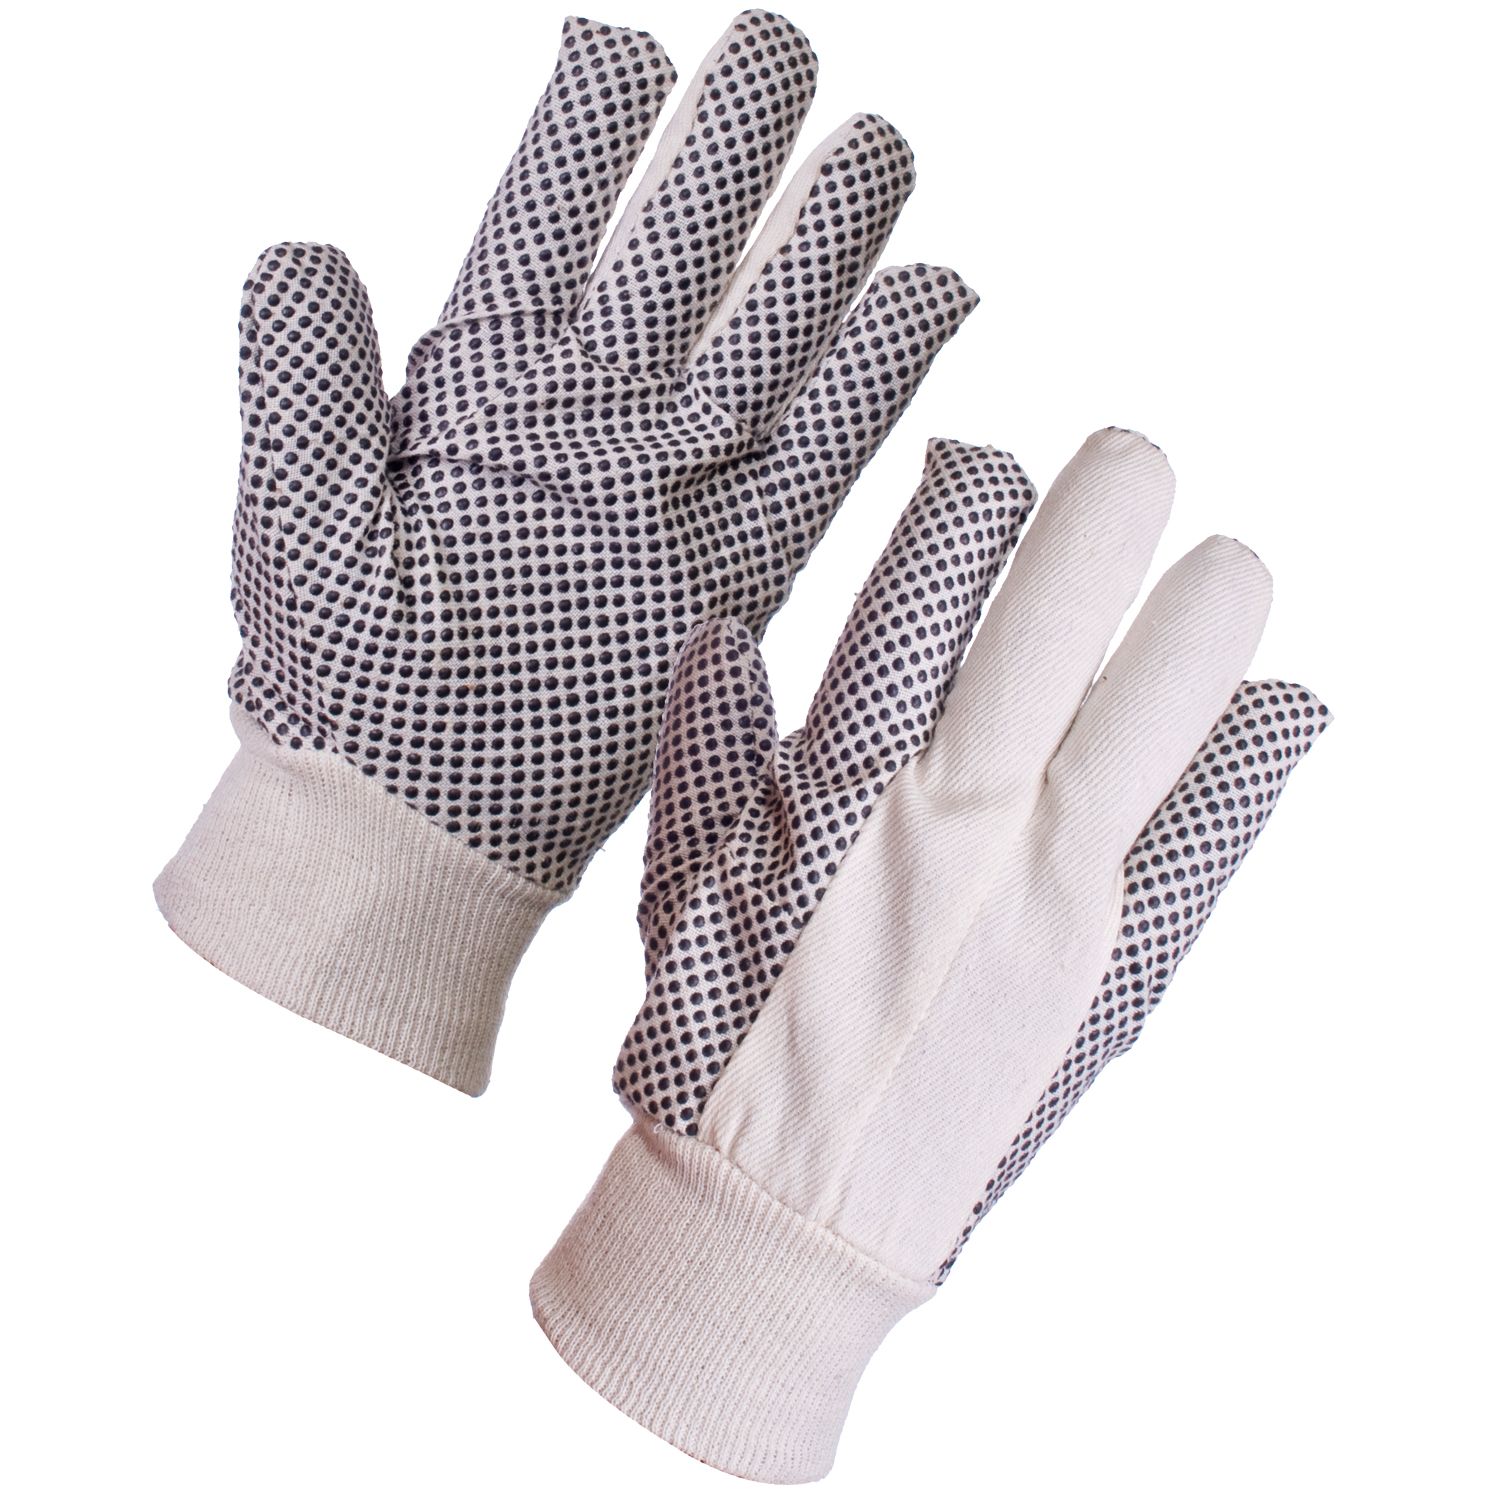 Cotton Drill Polka Dot Gloves